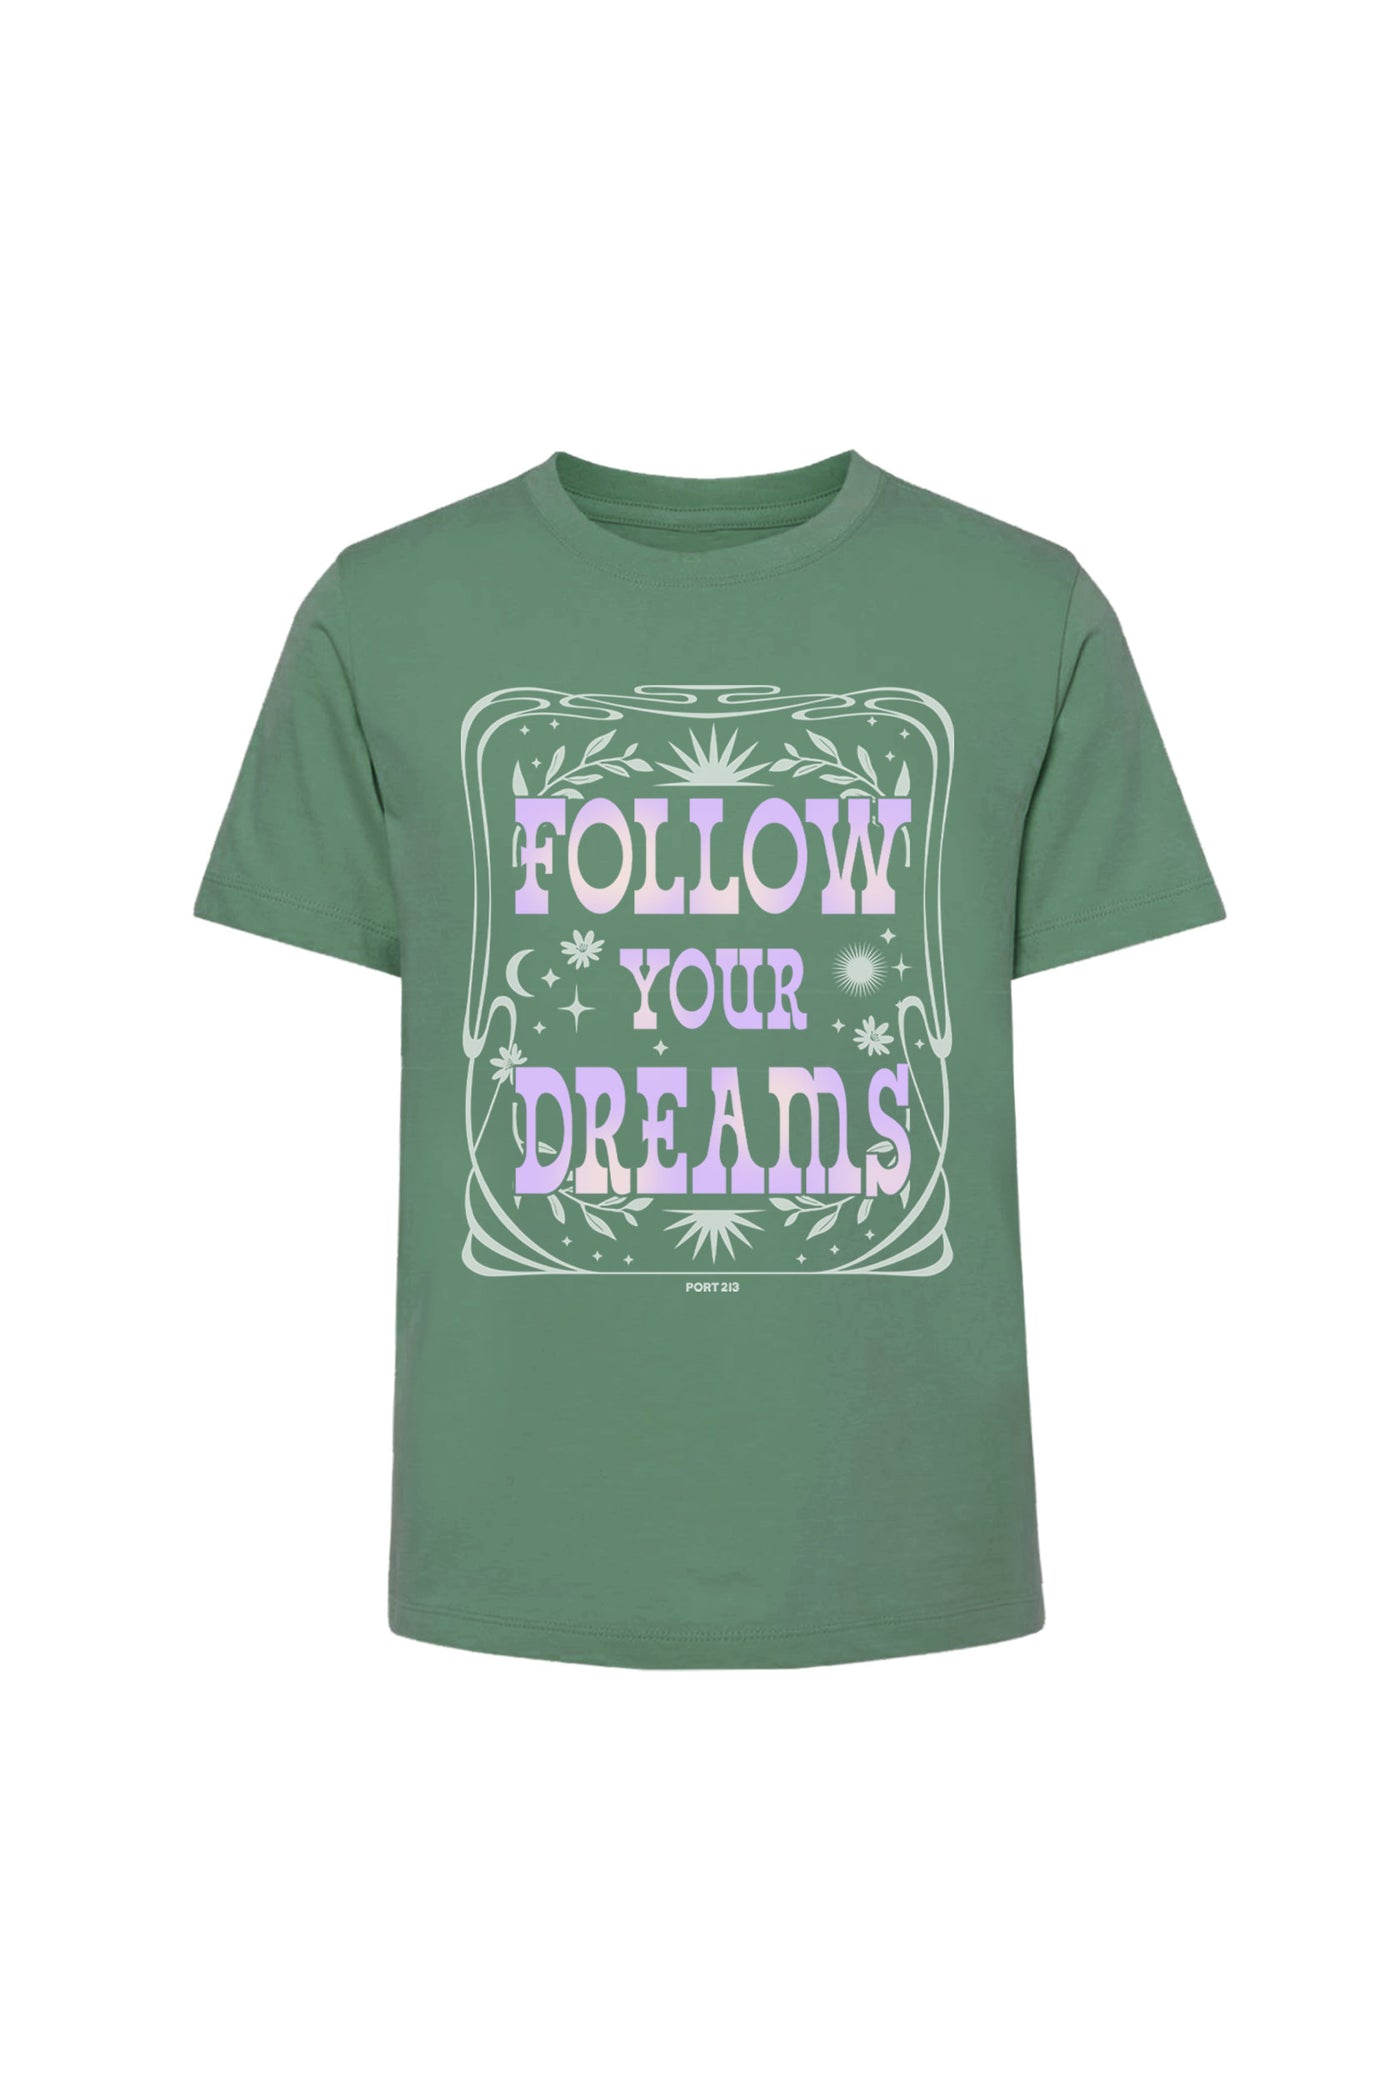 Follow Dreams T-shirt, Girls